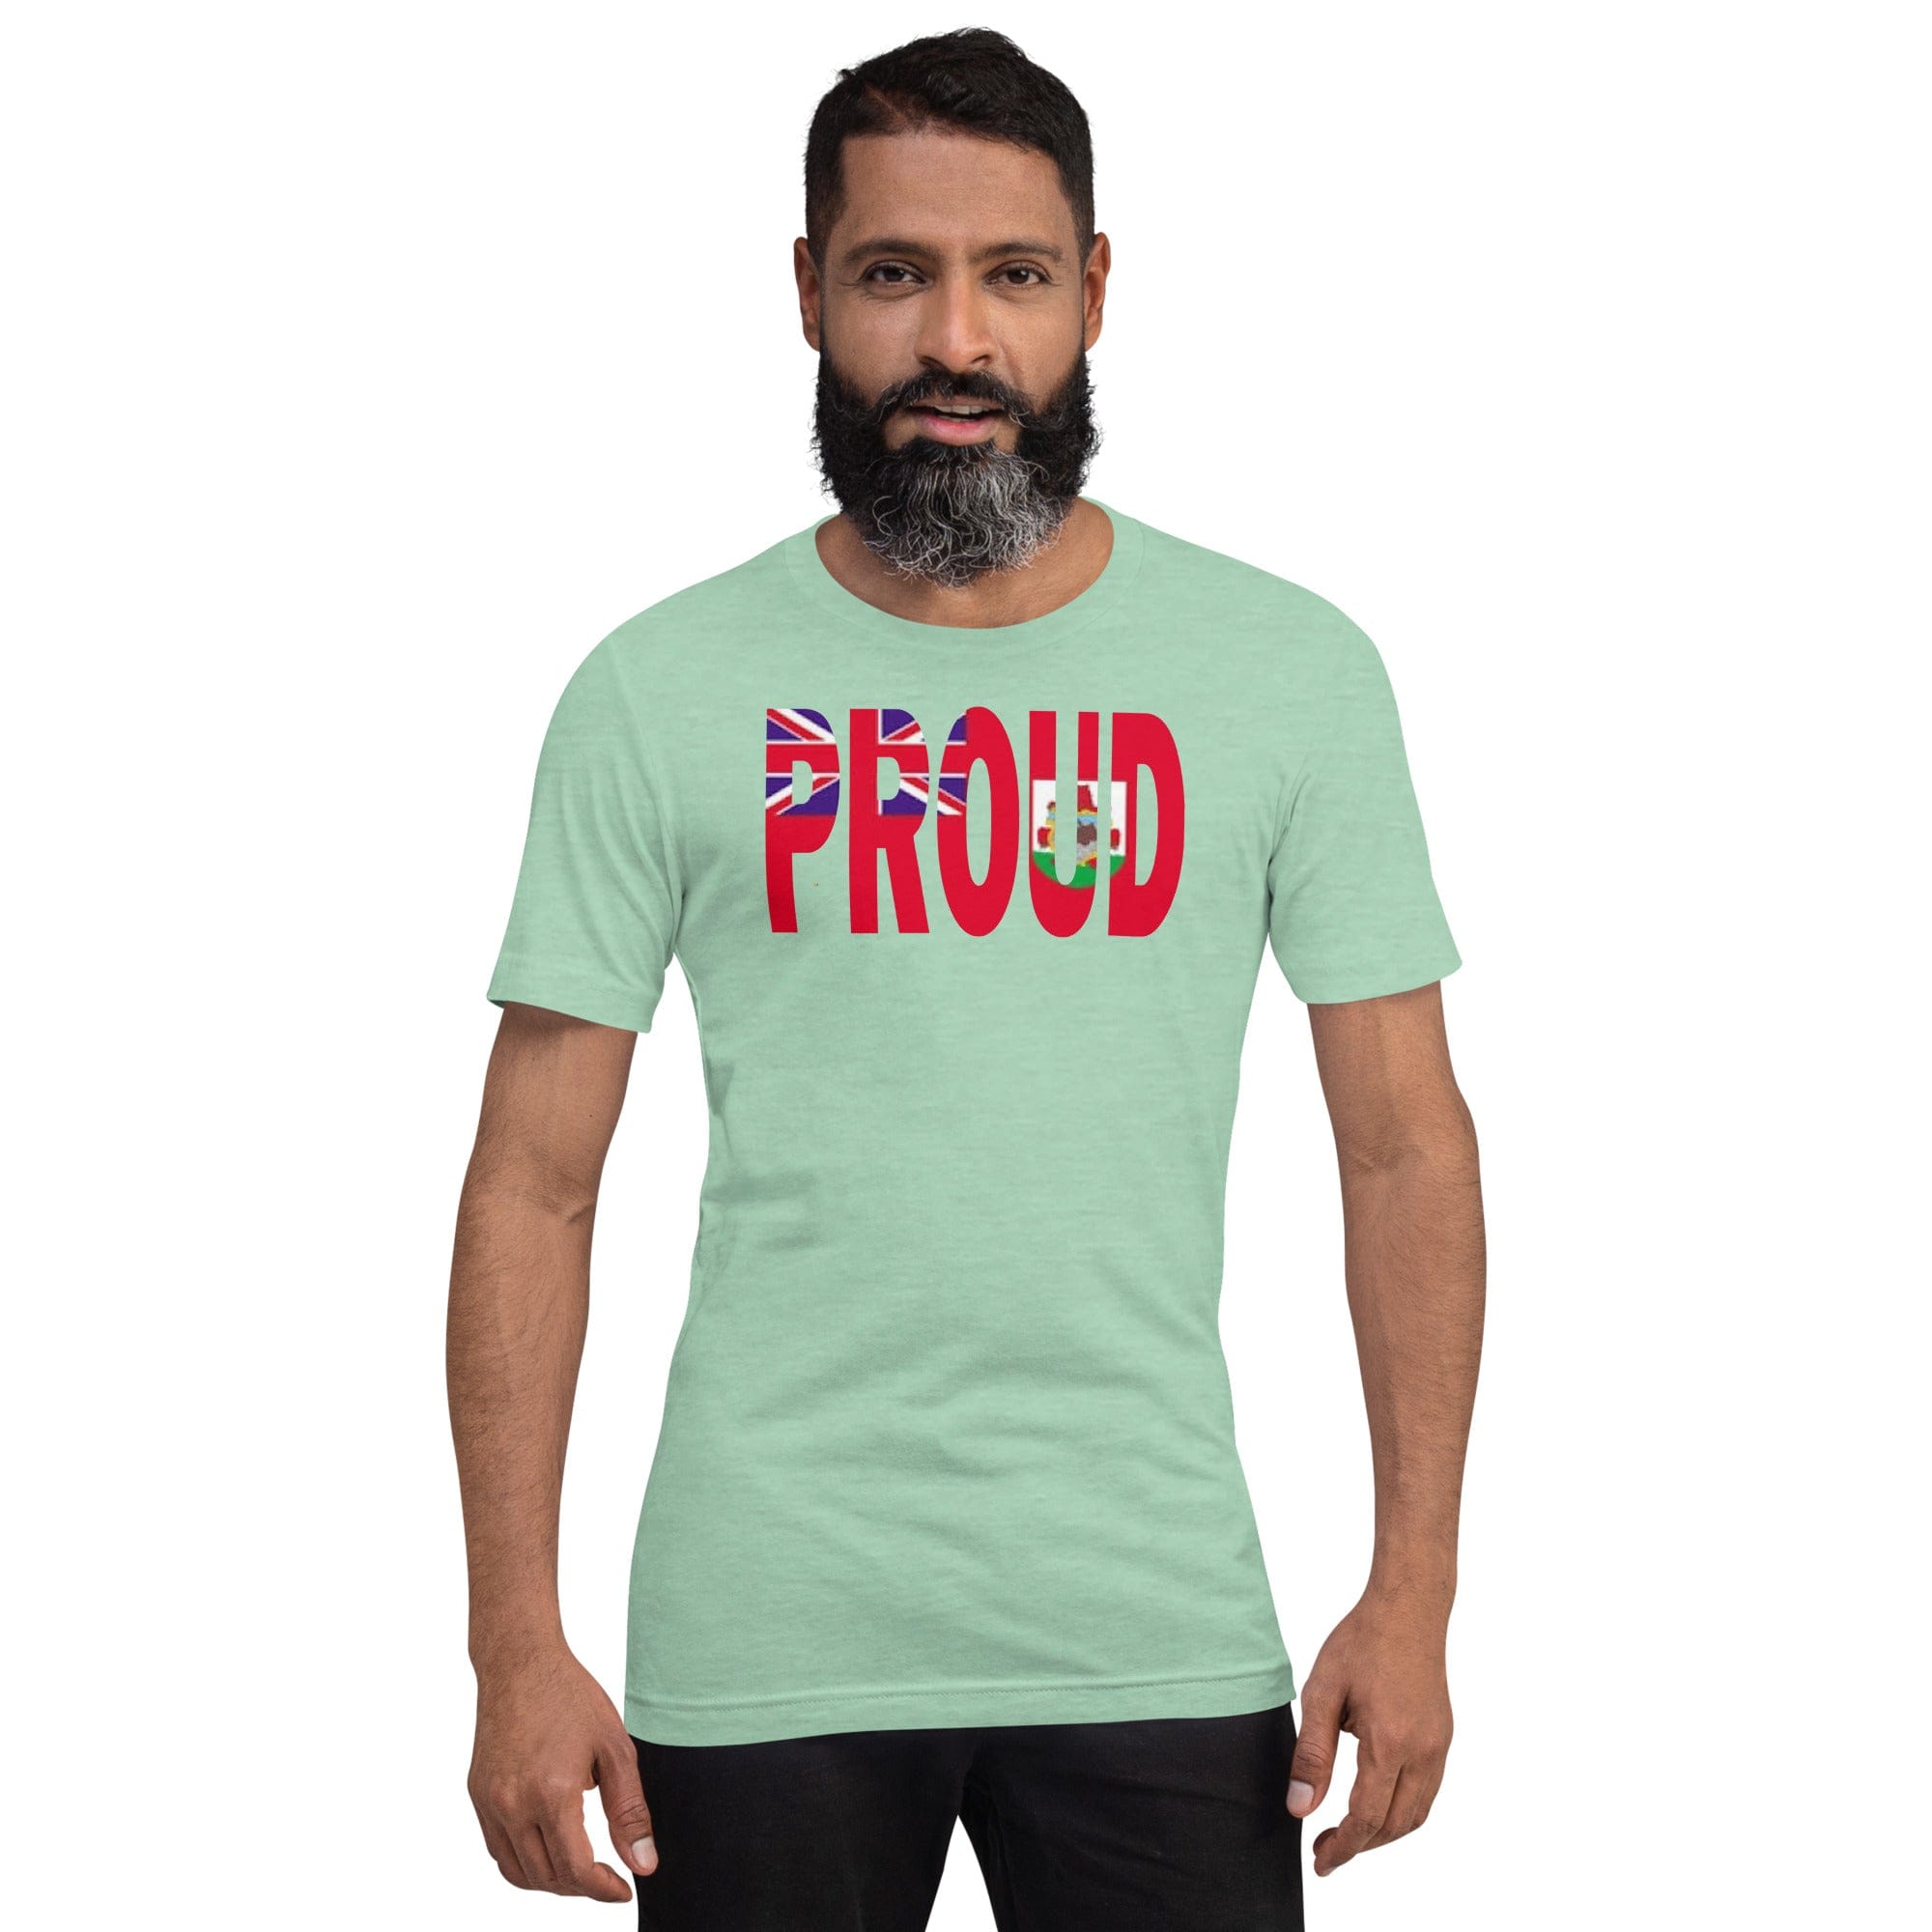 Proud Bermuda Flag mint color t-shirt on a black man.